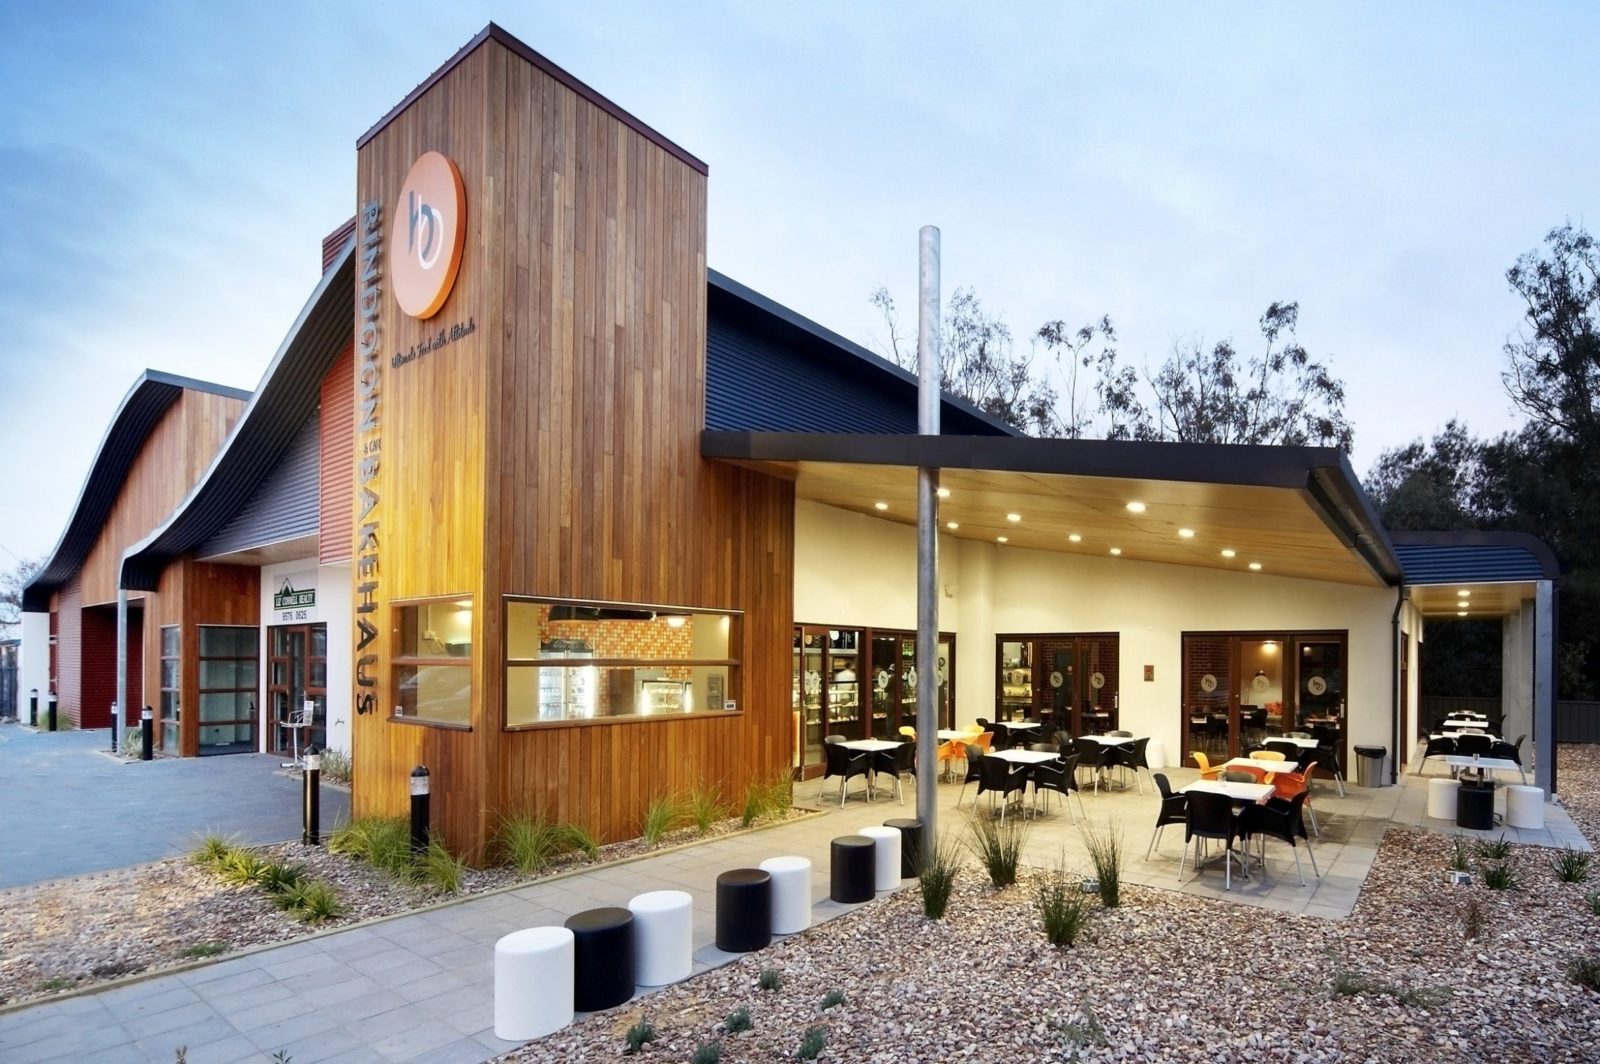 Bindoon Bakehaus and Cafe, Bindoon, Western Australia